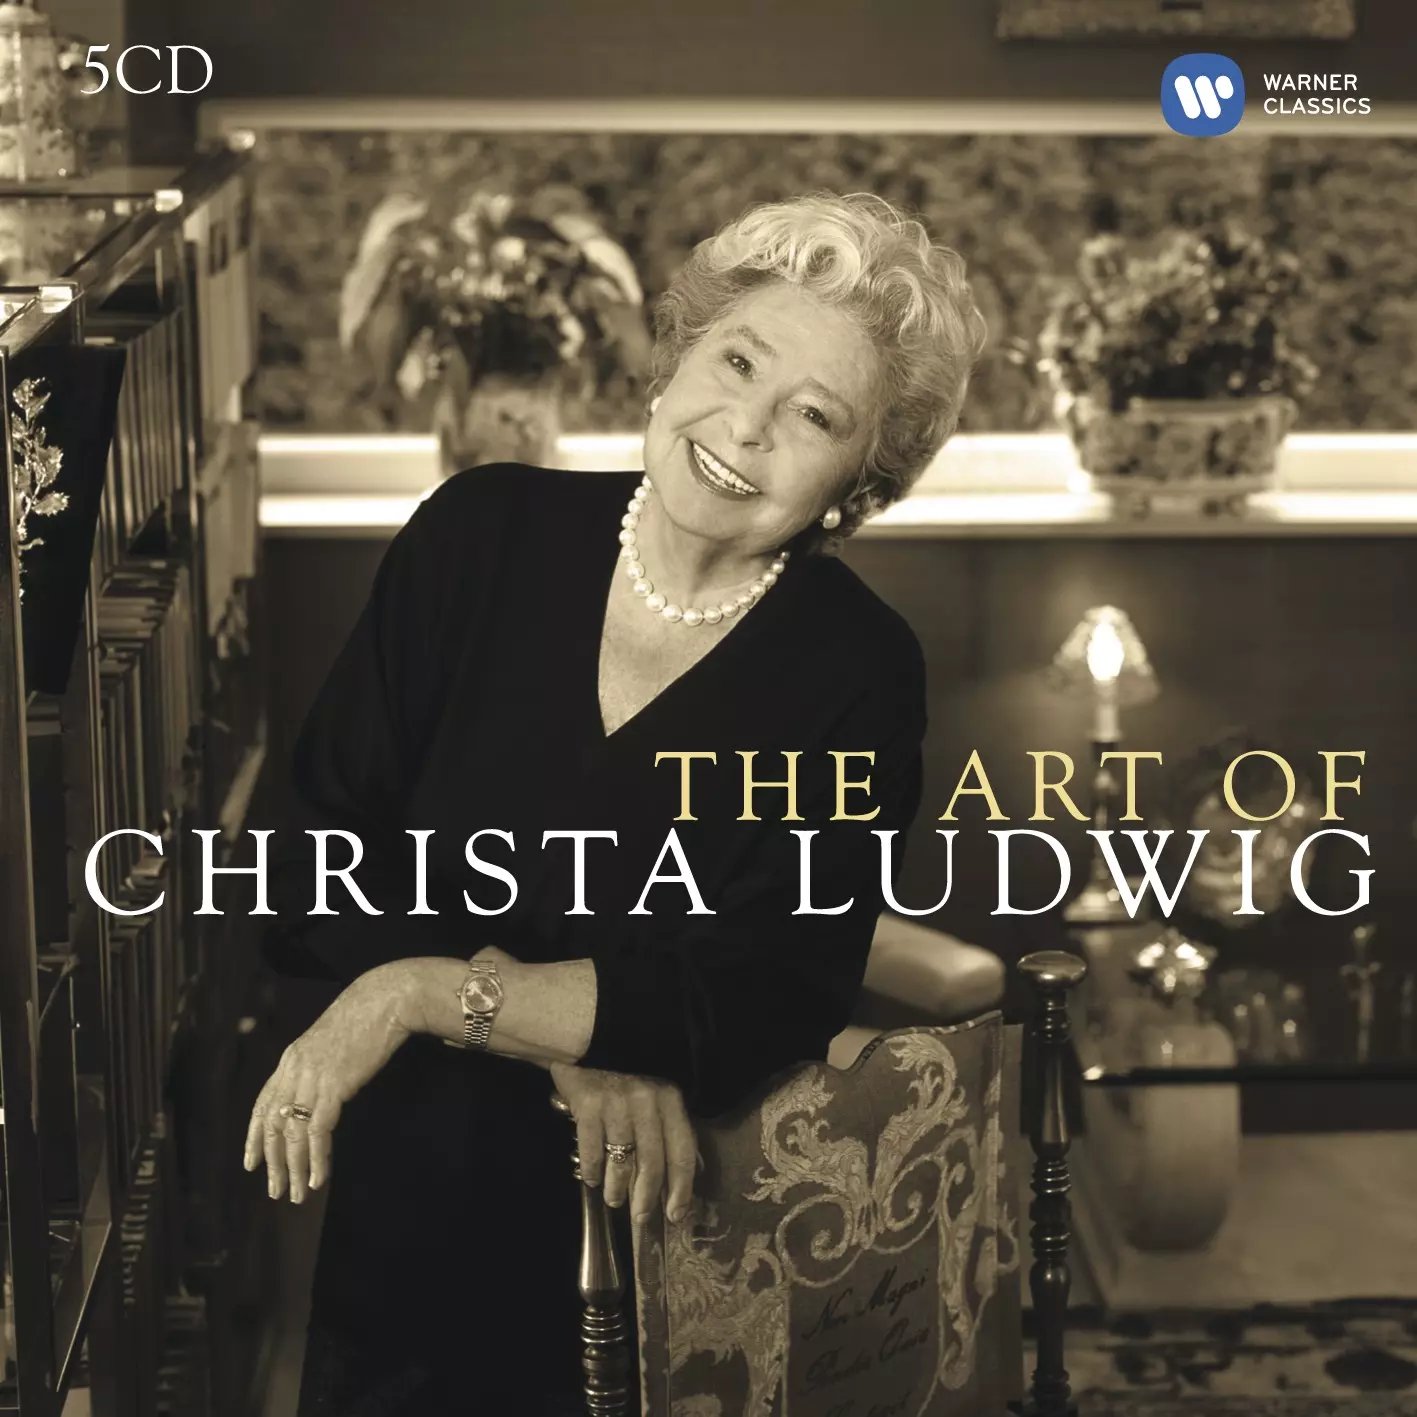 The Art of Christa Ludwig